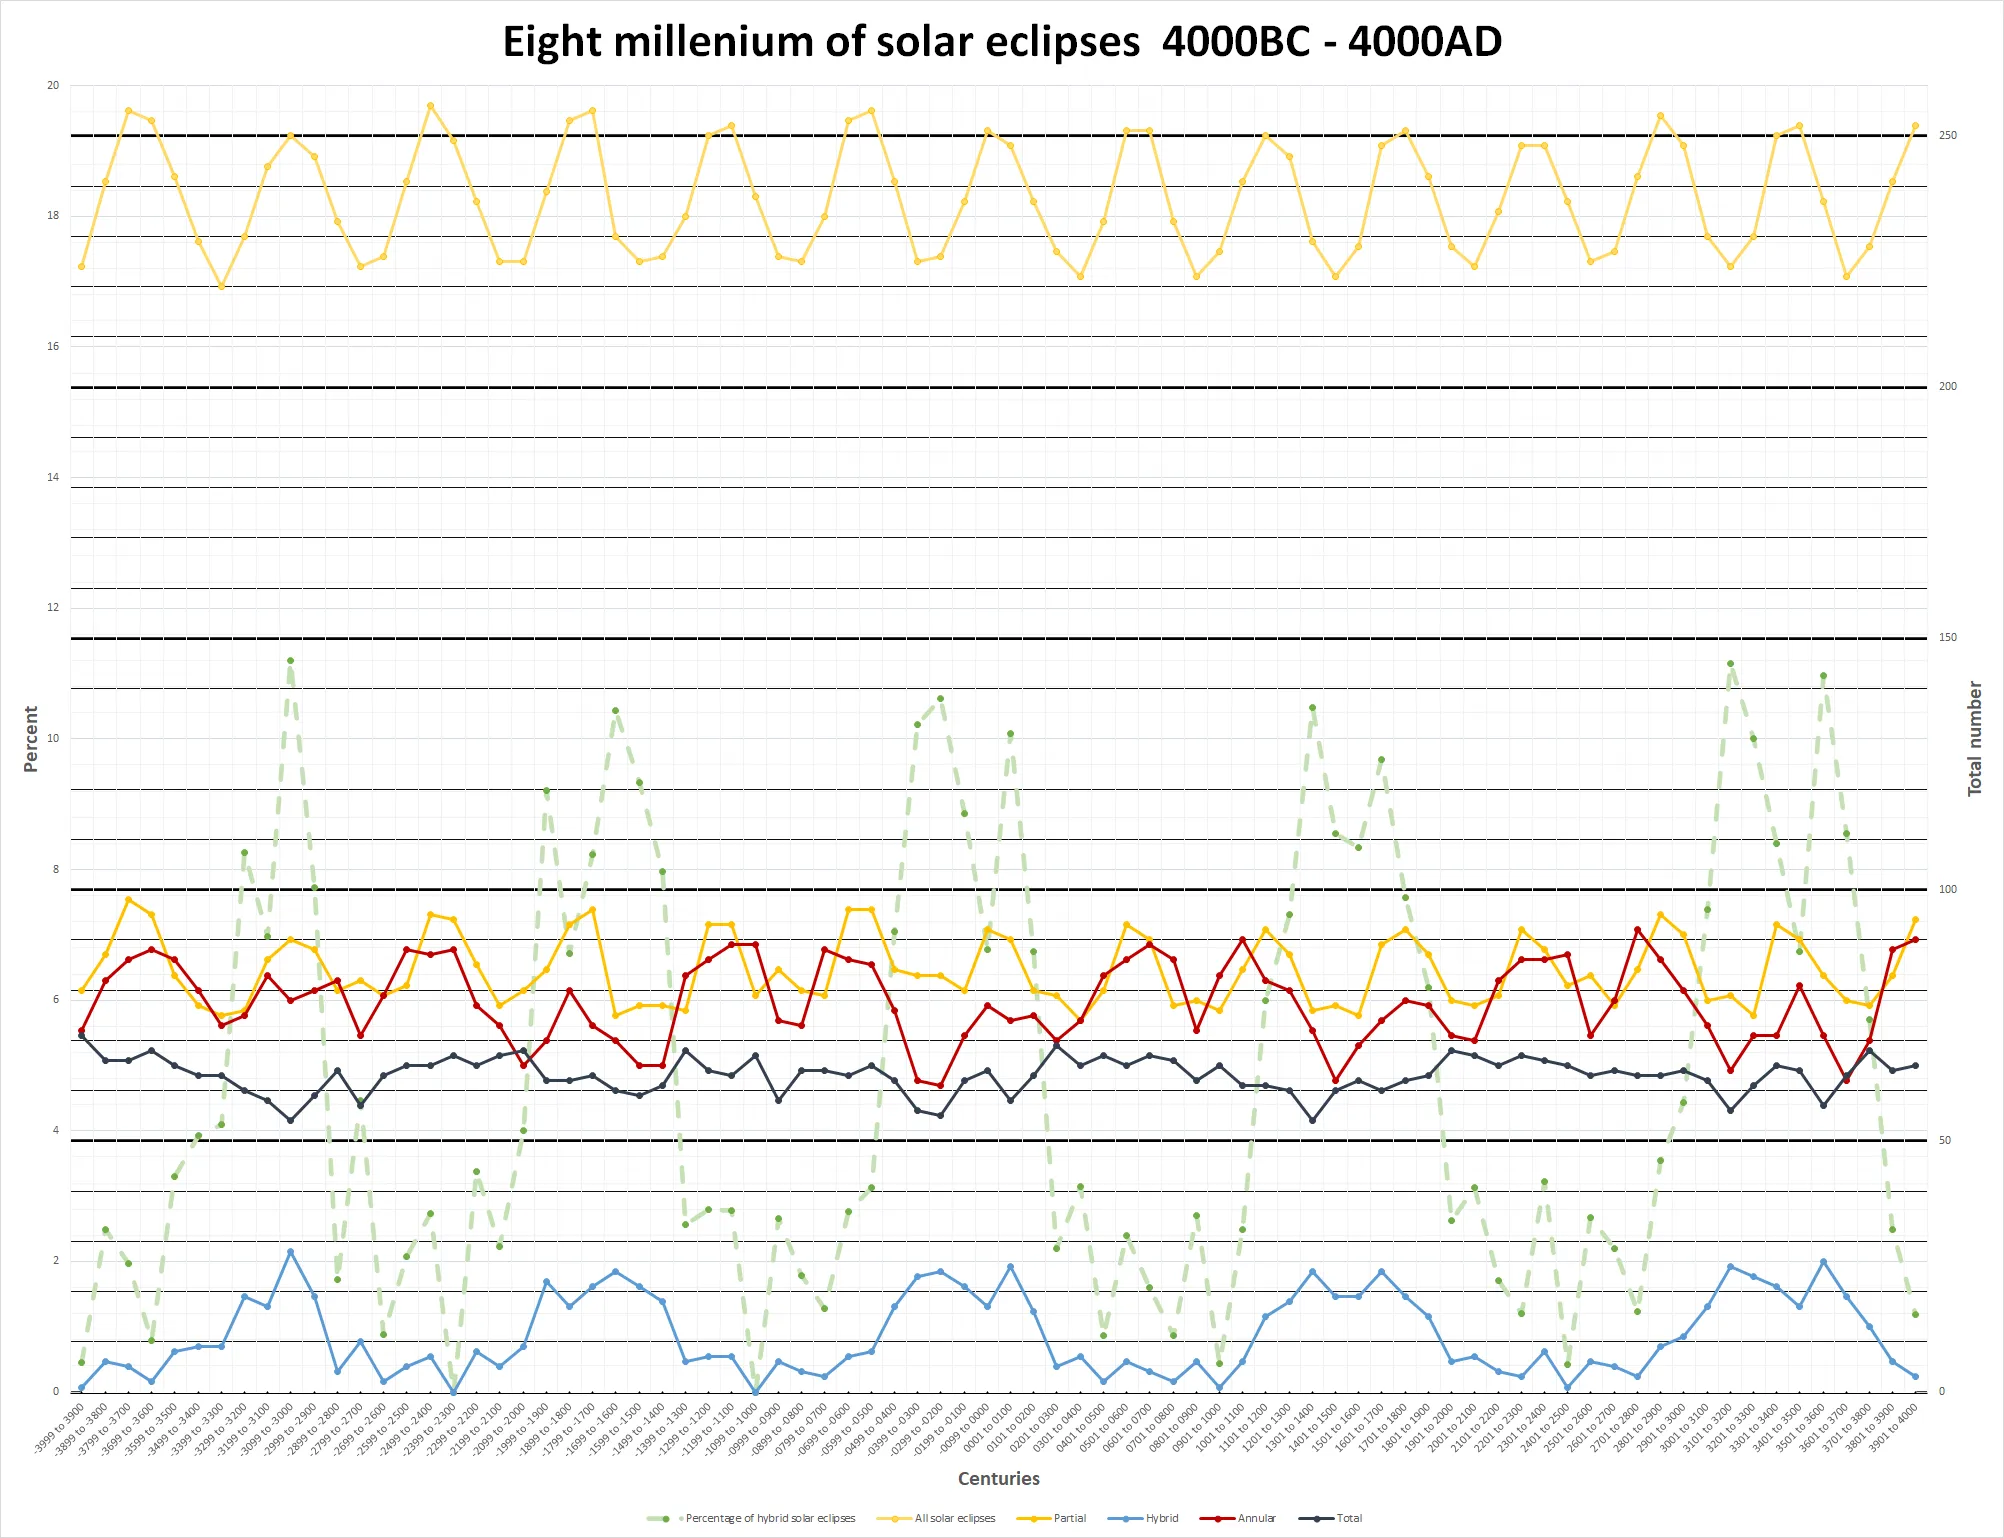 Eight millenium of solar eclipses BC4000 - AD 4000 - chart